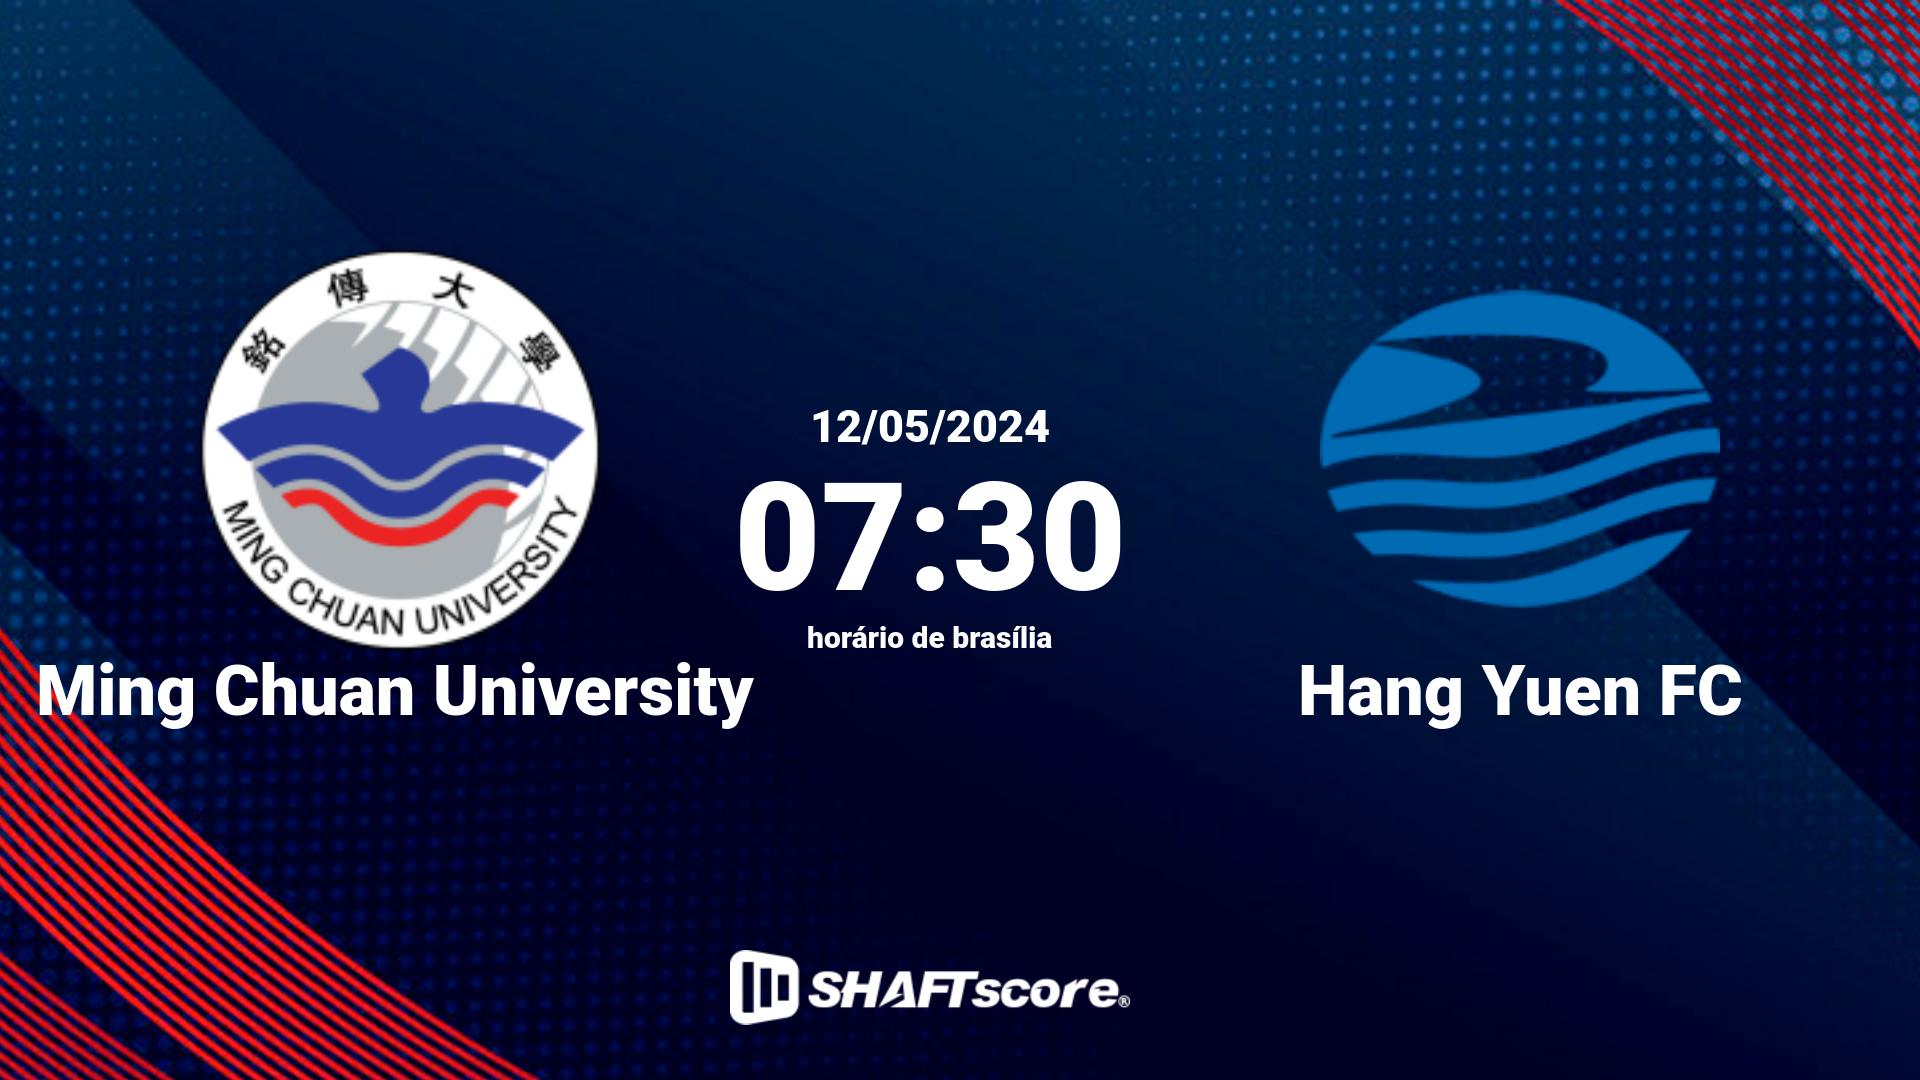 Estatísticas do jogo Ming Chuan University vs Hang Yuen FC 12.05 07:30